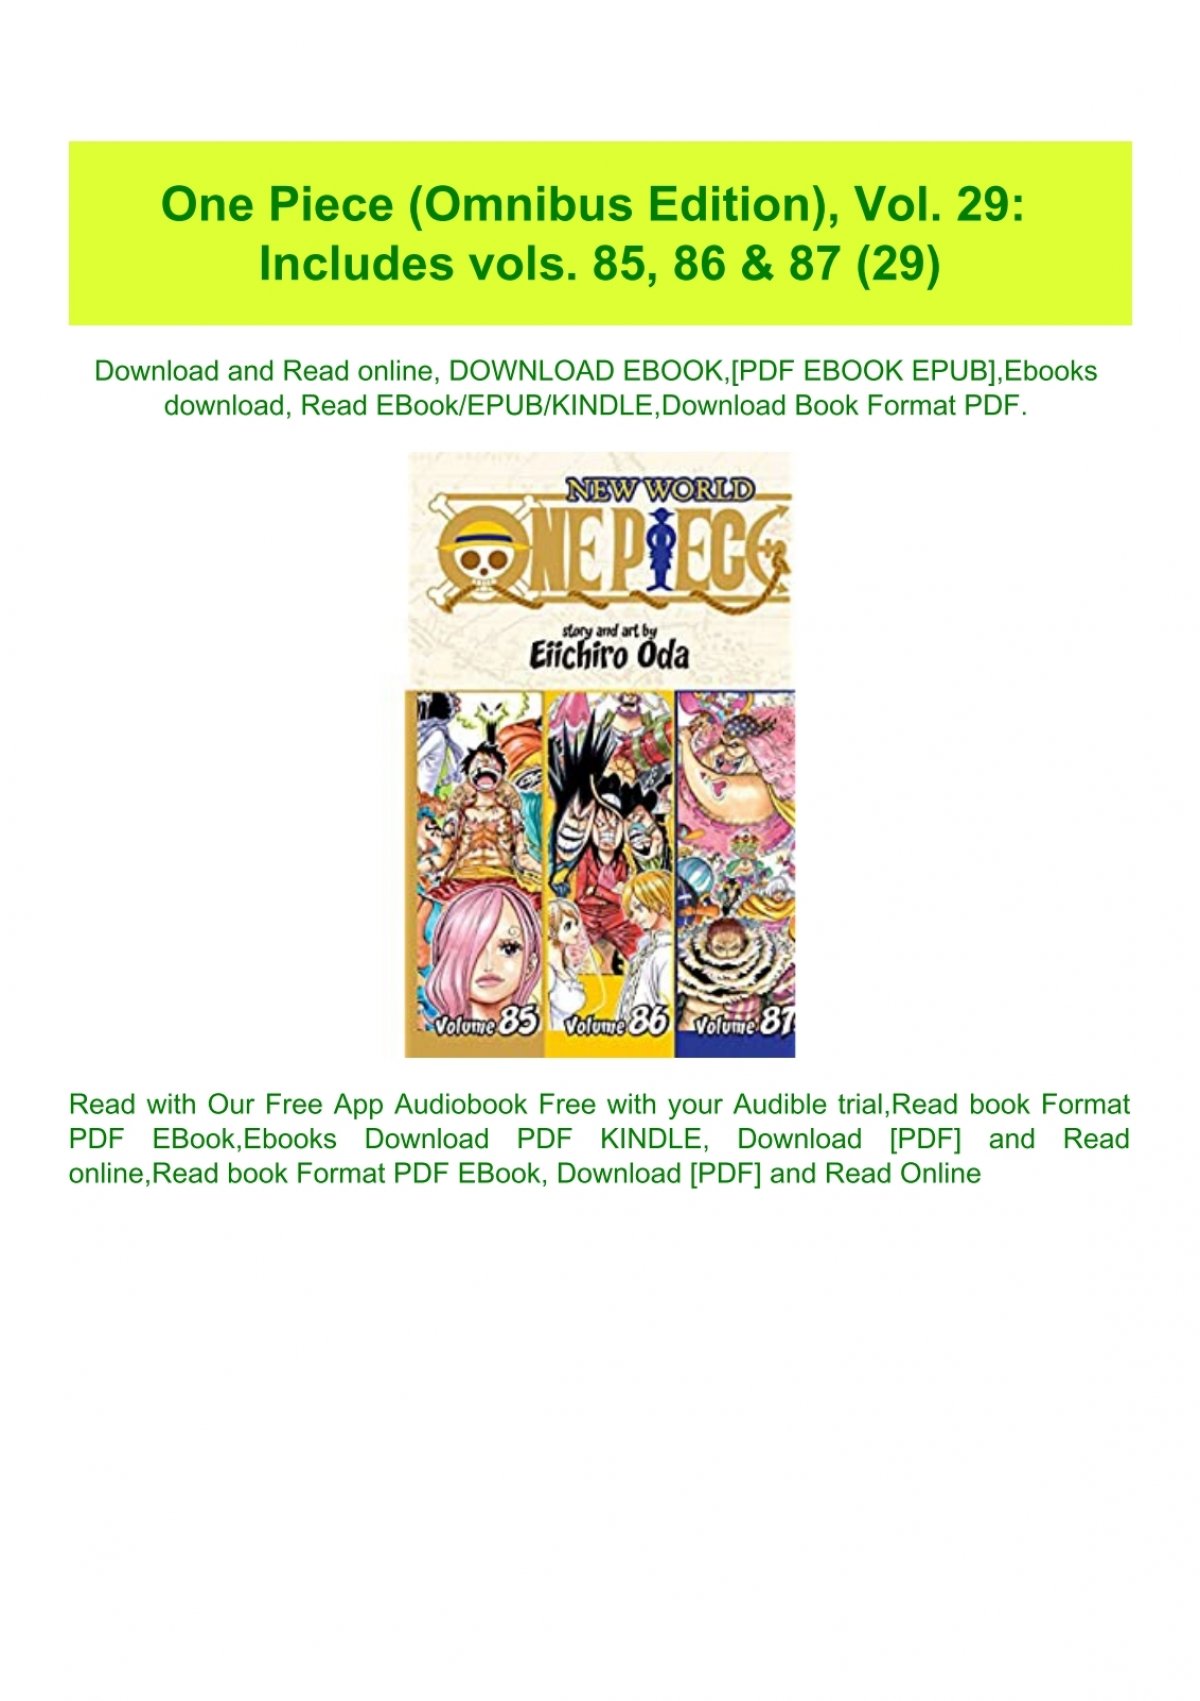 Read Pdf One Piece Omnibus Edition Vol 29 Includes Vols 85 86 Amp Amp 87 29 Free Ebook